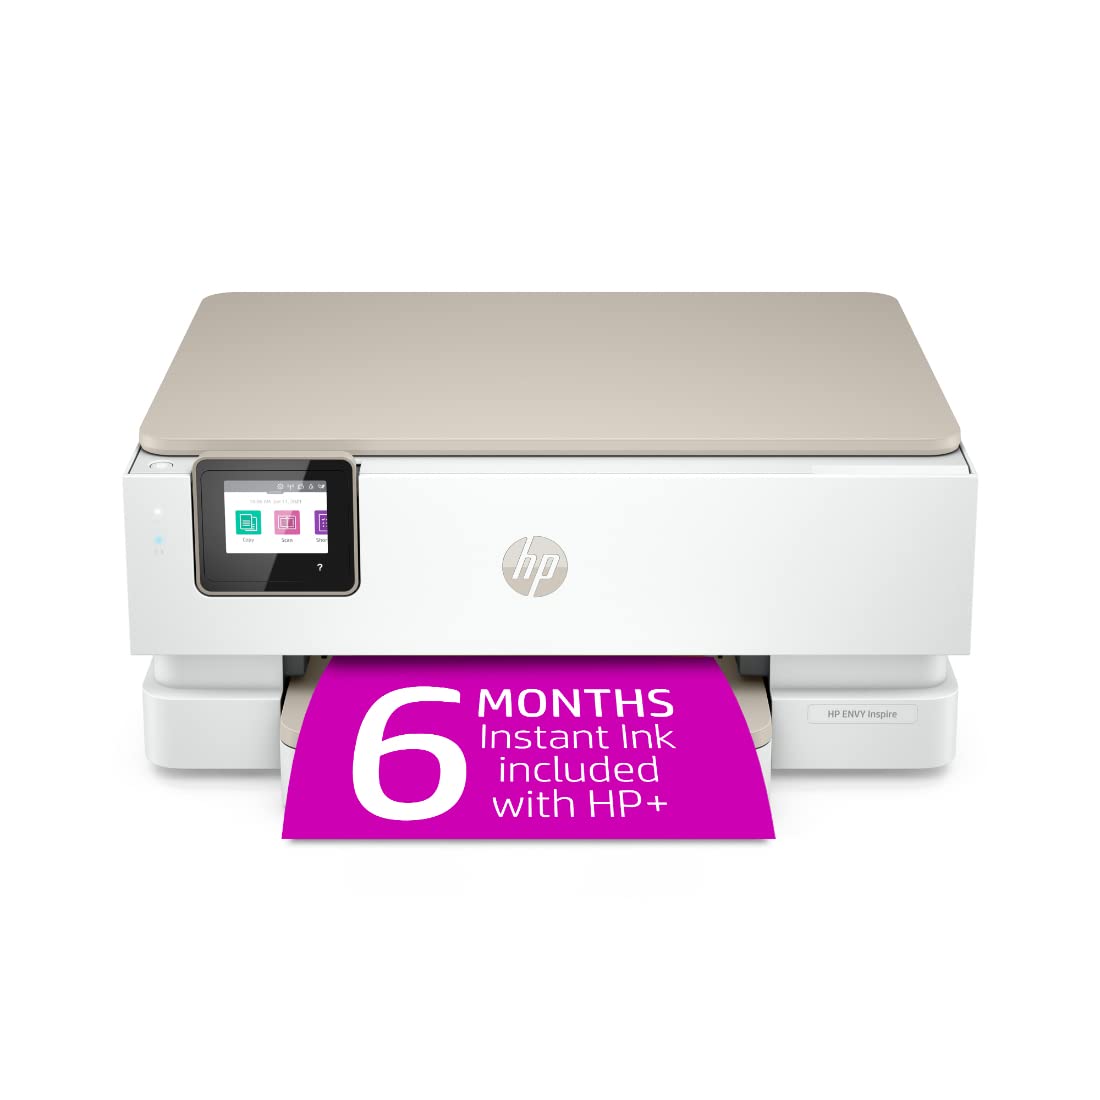 HP Envy Inspire 7255e Wireless Color All-in-One Printer